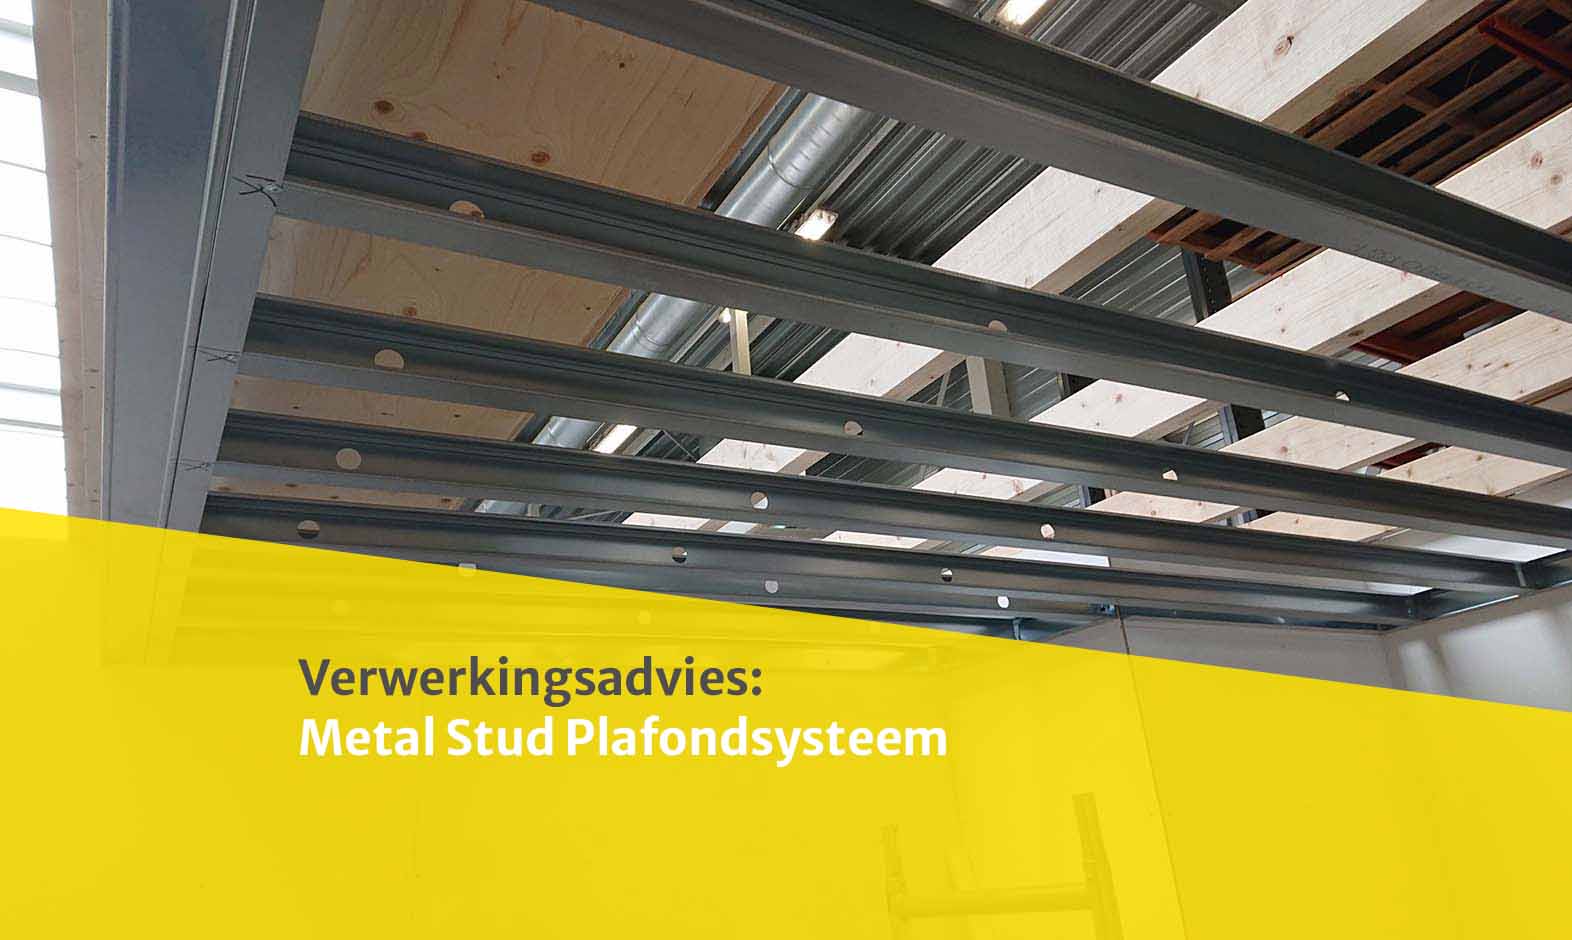 Handleiding Metal Stud Plafondsysteem